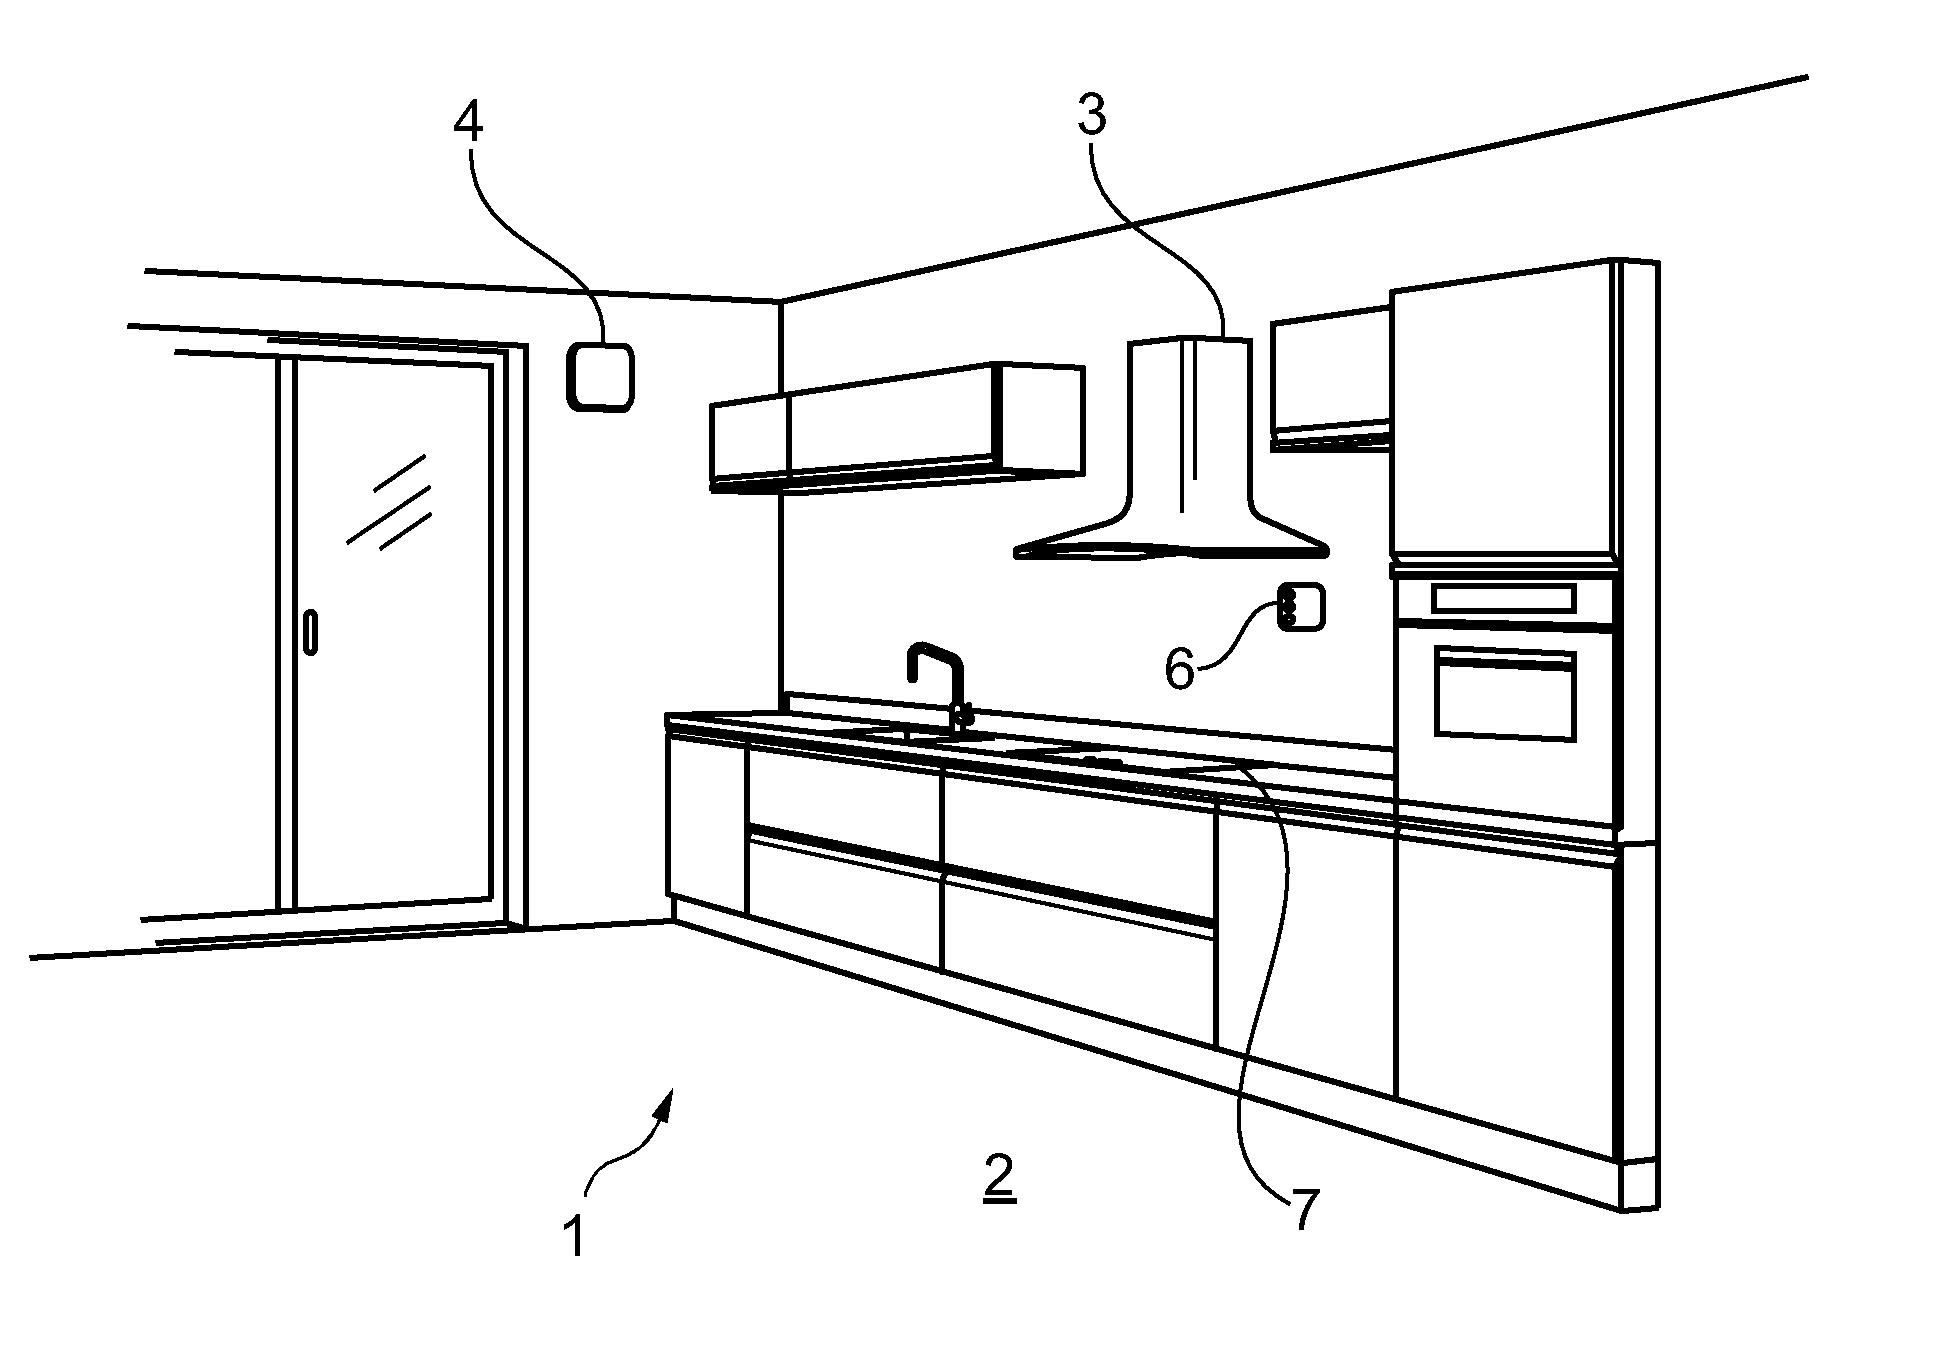 Ventilation system for a room